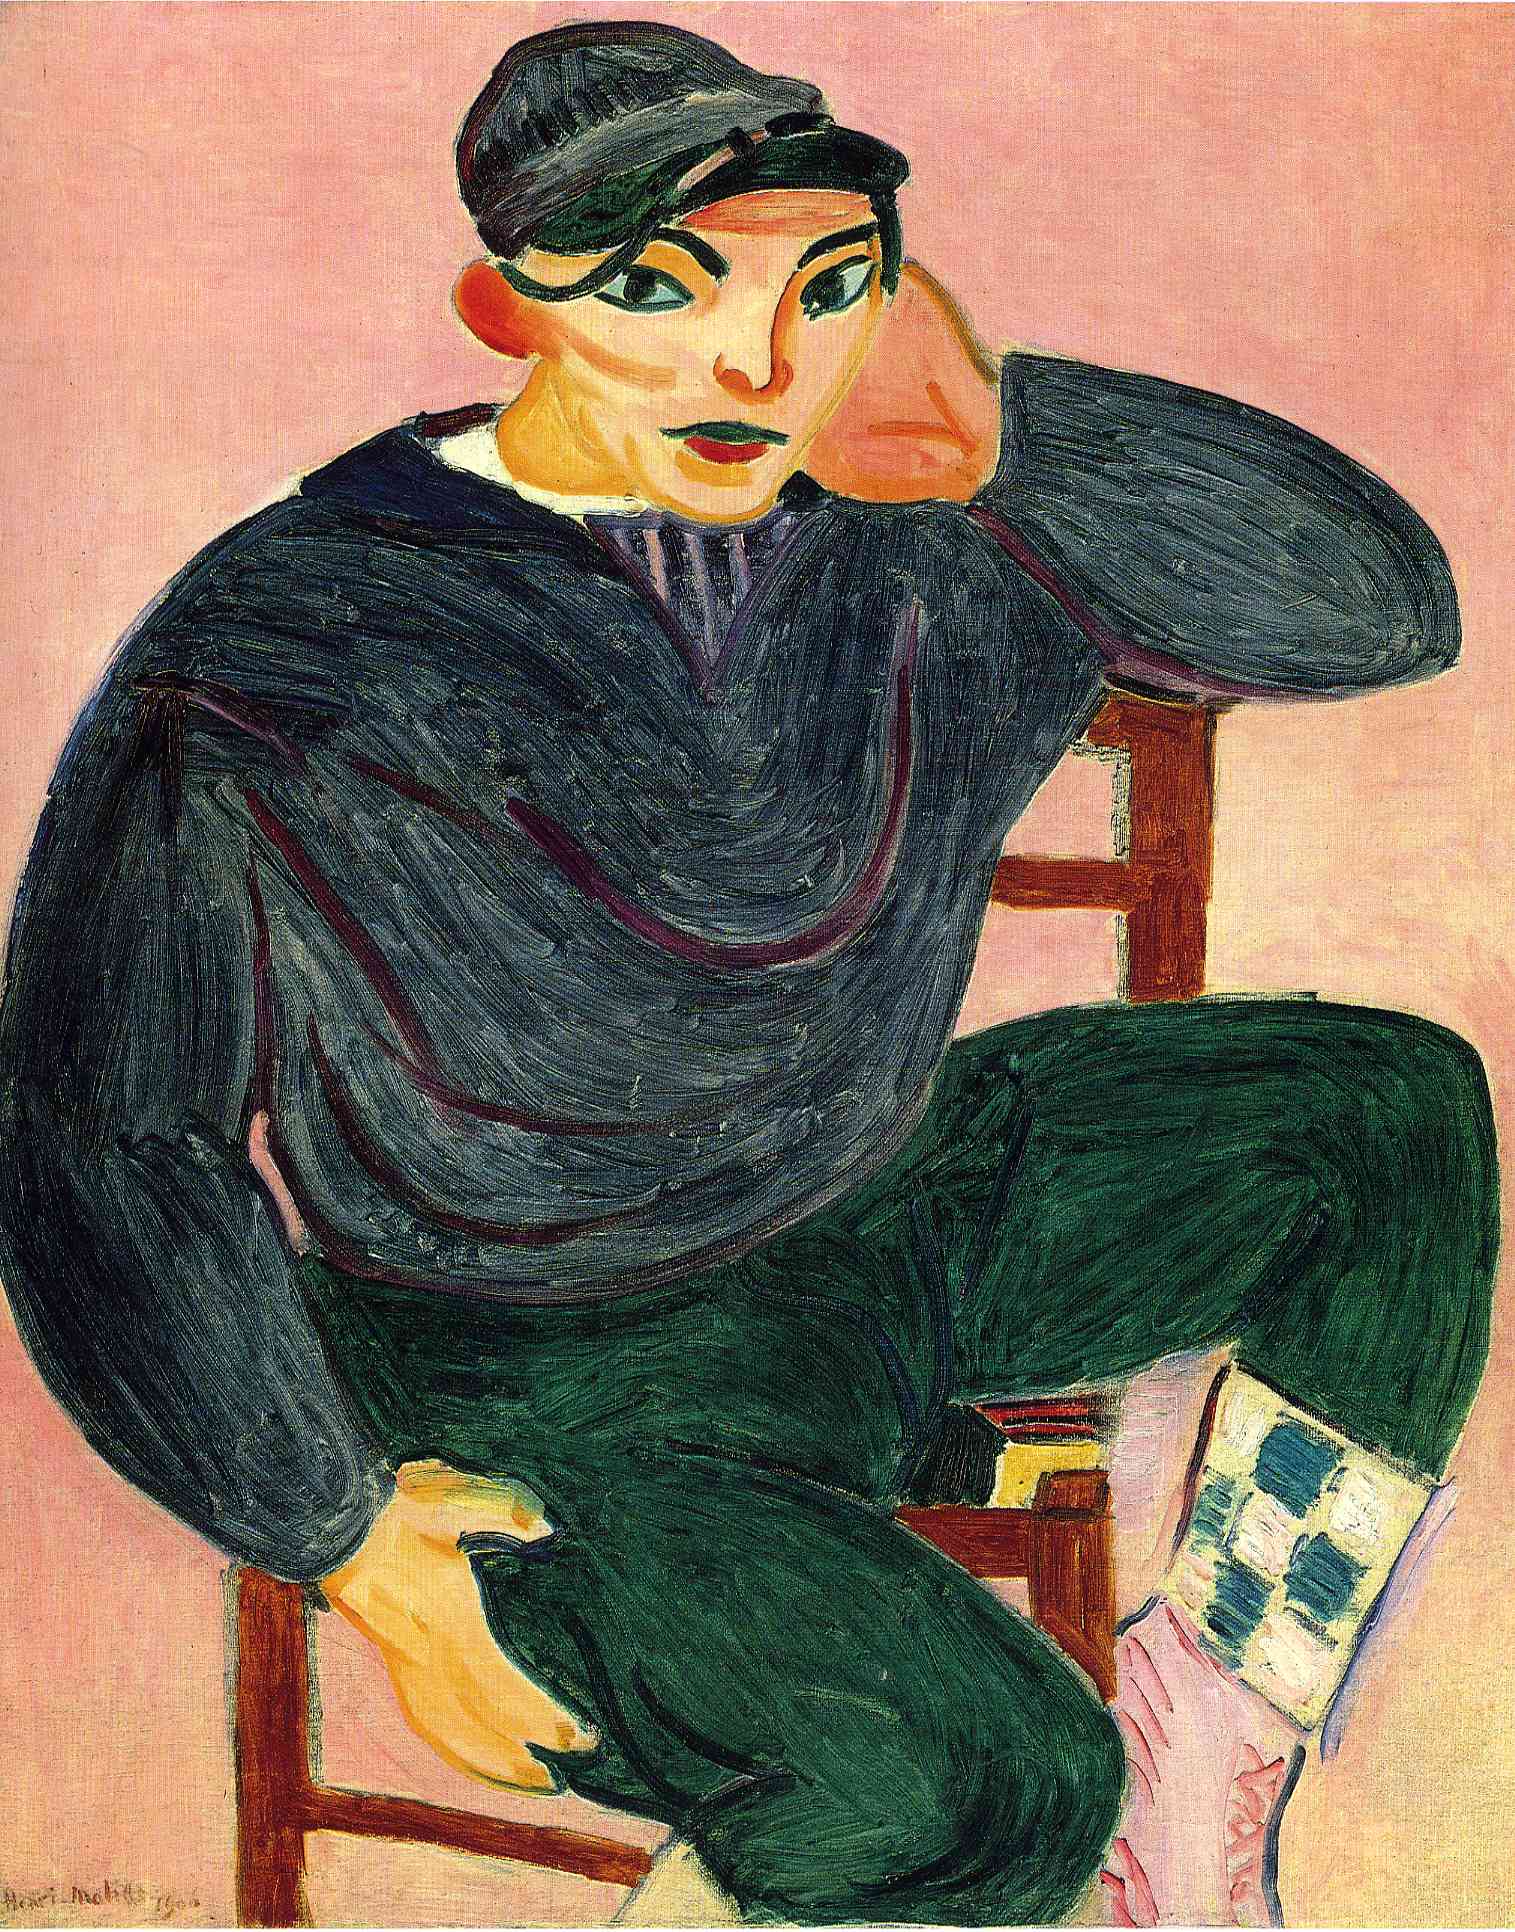 Le Jeune Marin II by Henri Matisse - 1906 - 100 x 81 cm collection privée